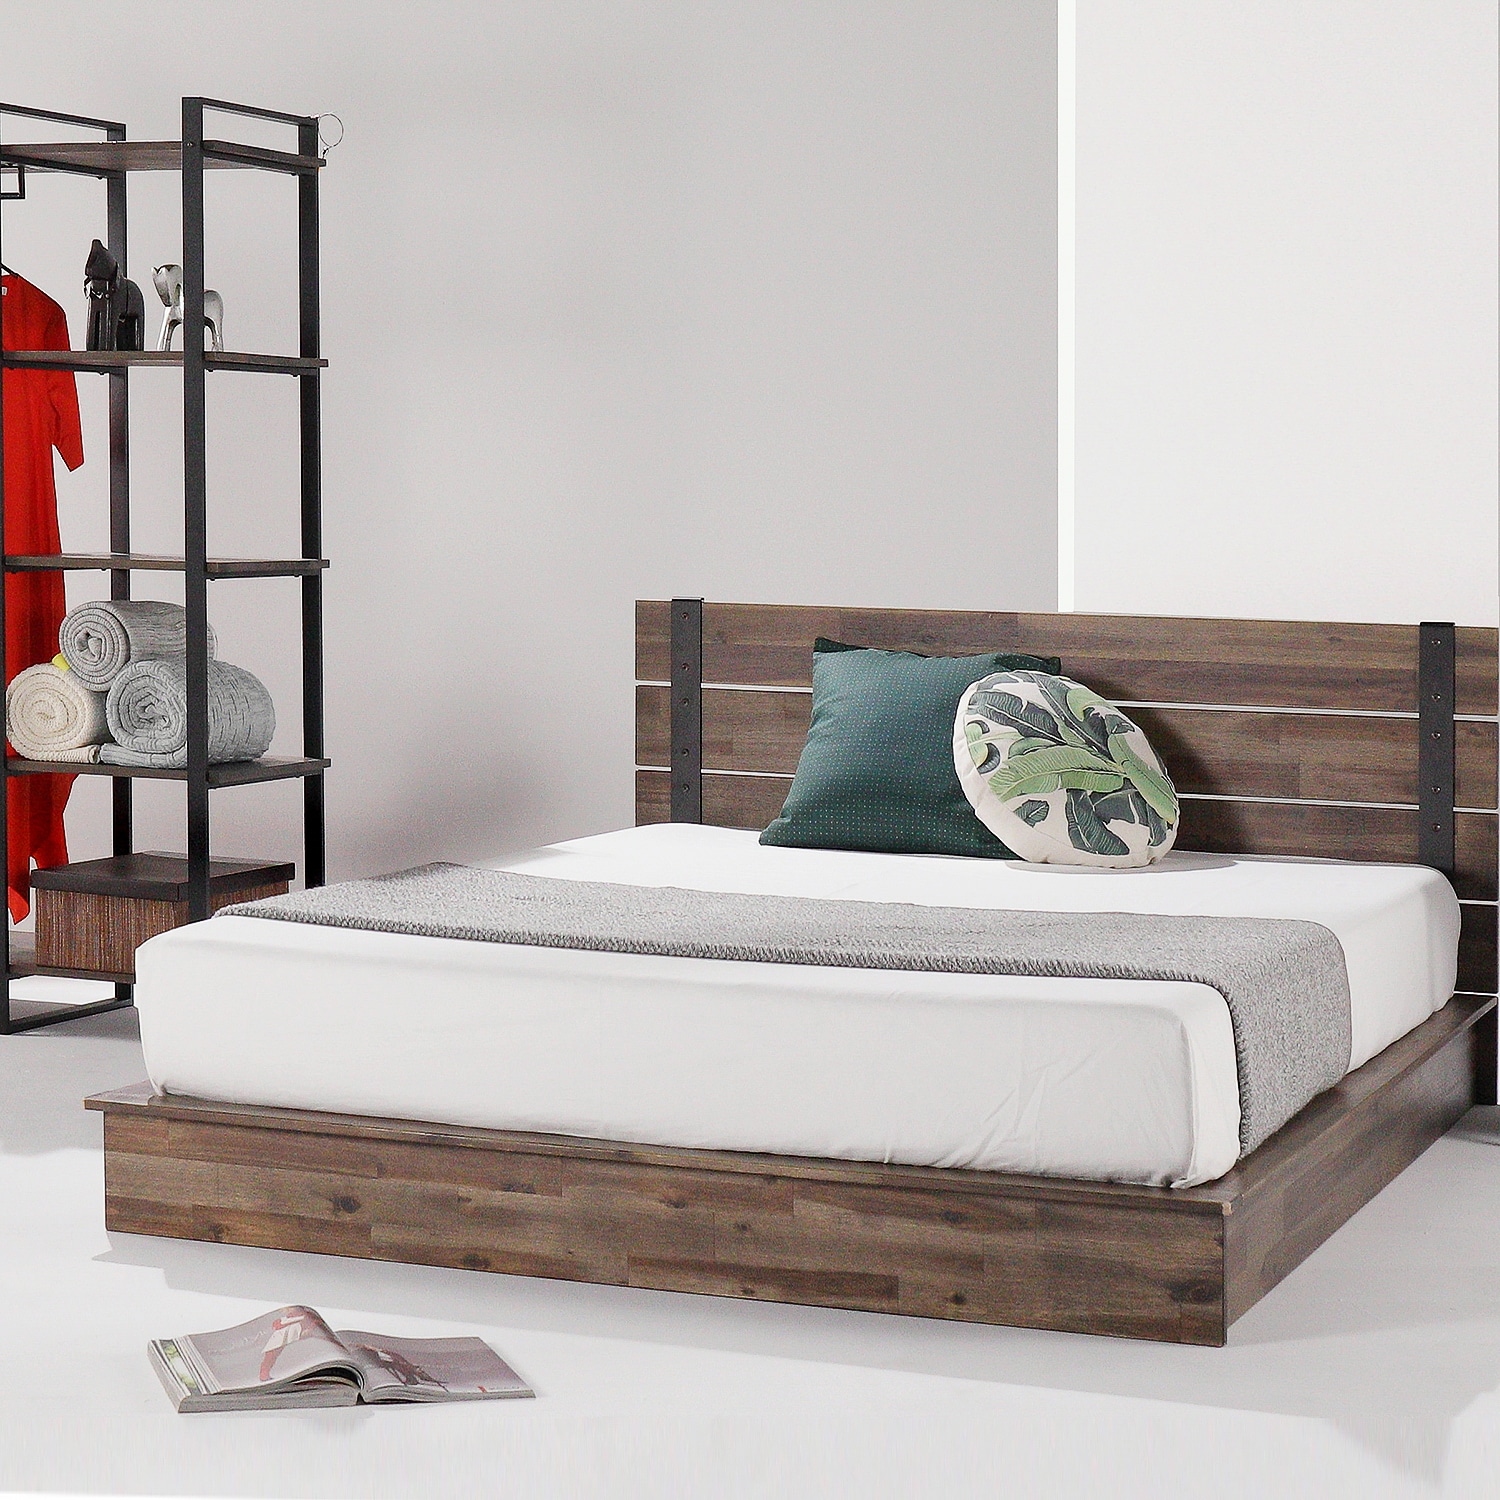 Zinus Industrial Metal Wood Bed Frame Single Double Queen King Base Mattress 